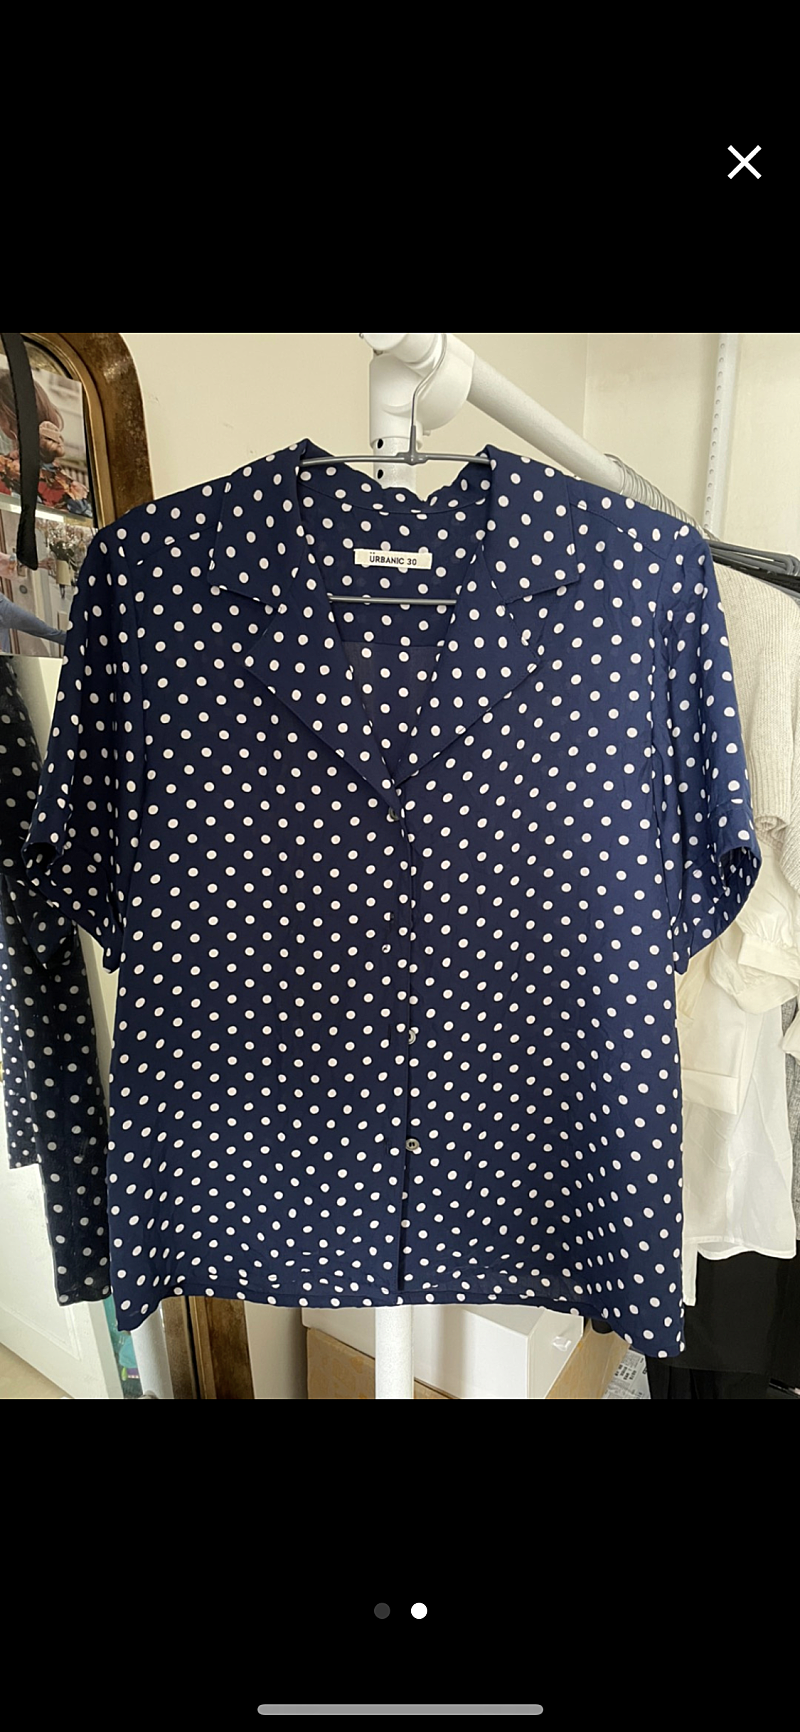 Urbanic30 dot blouse